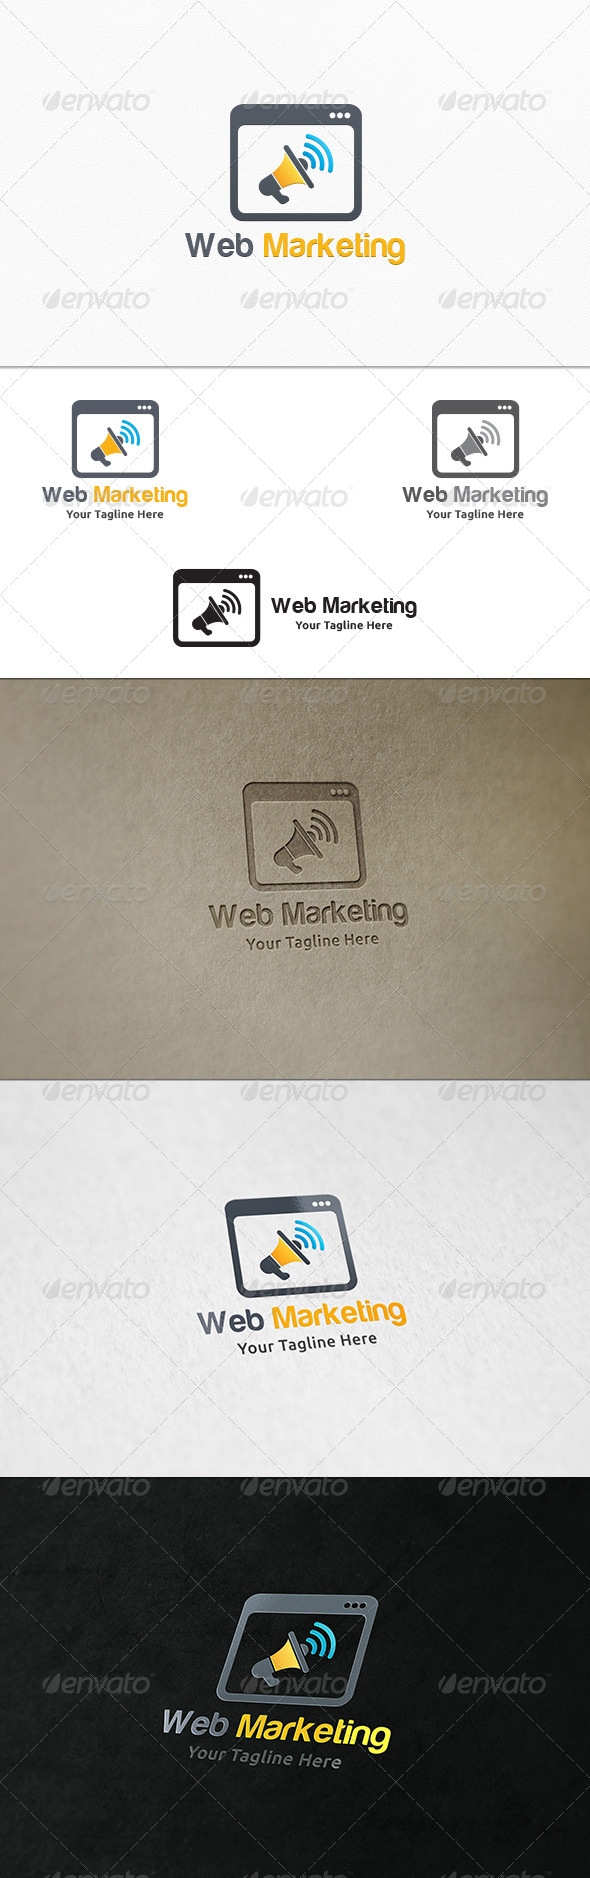 Web Marketing - Logo Template